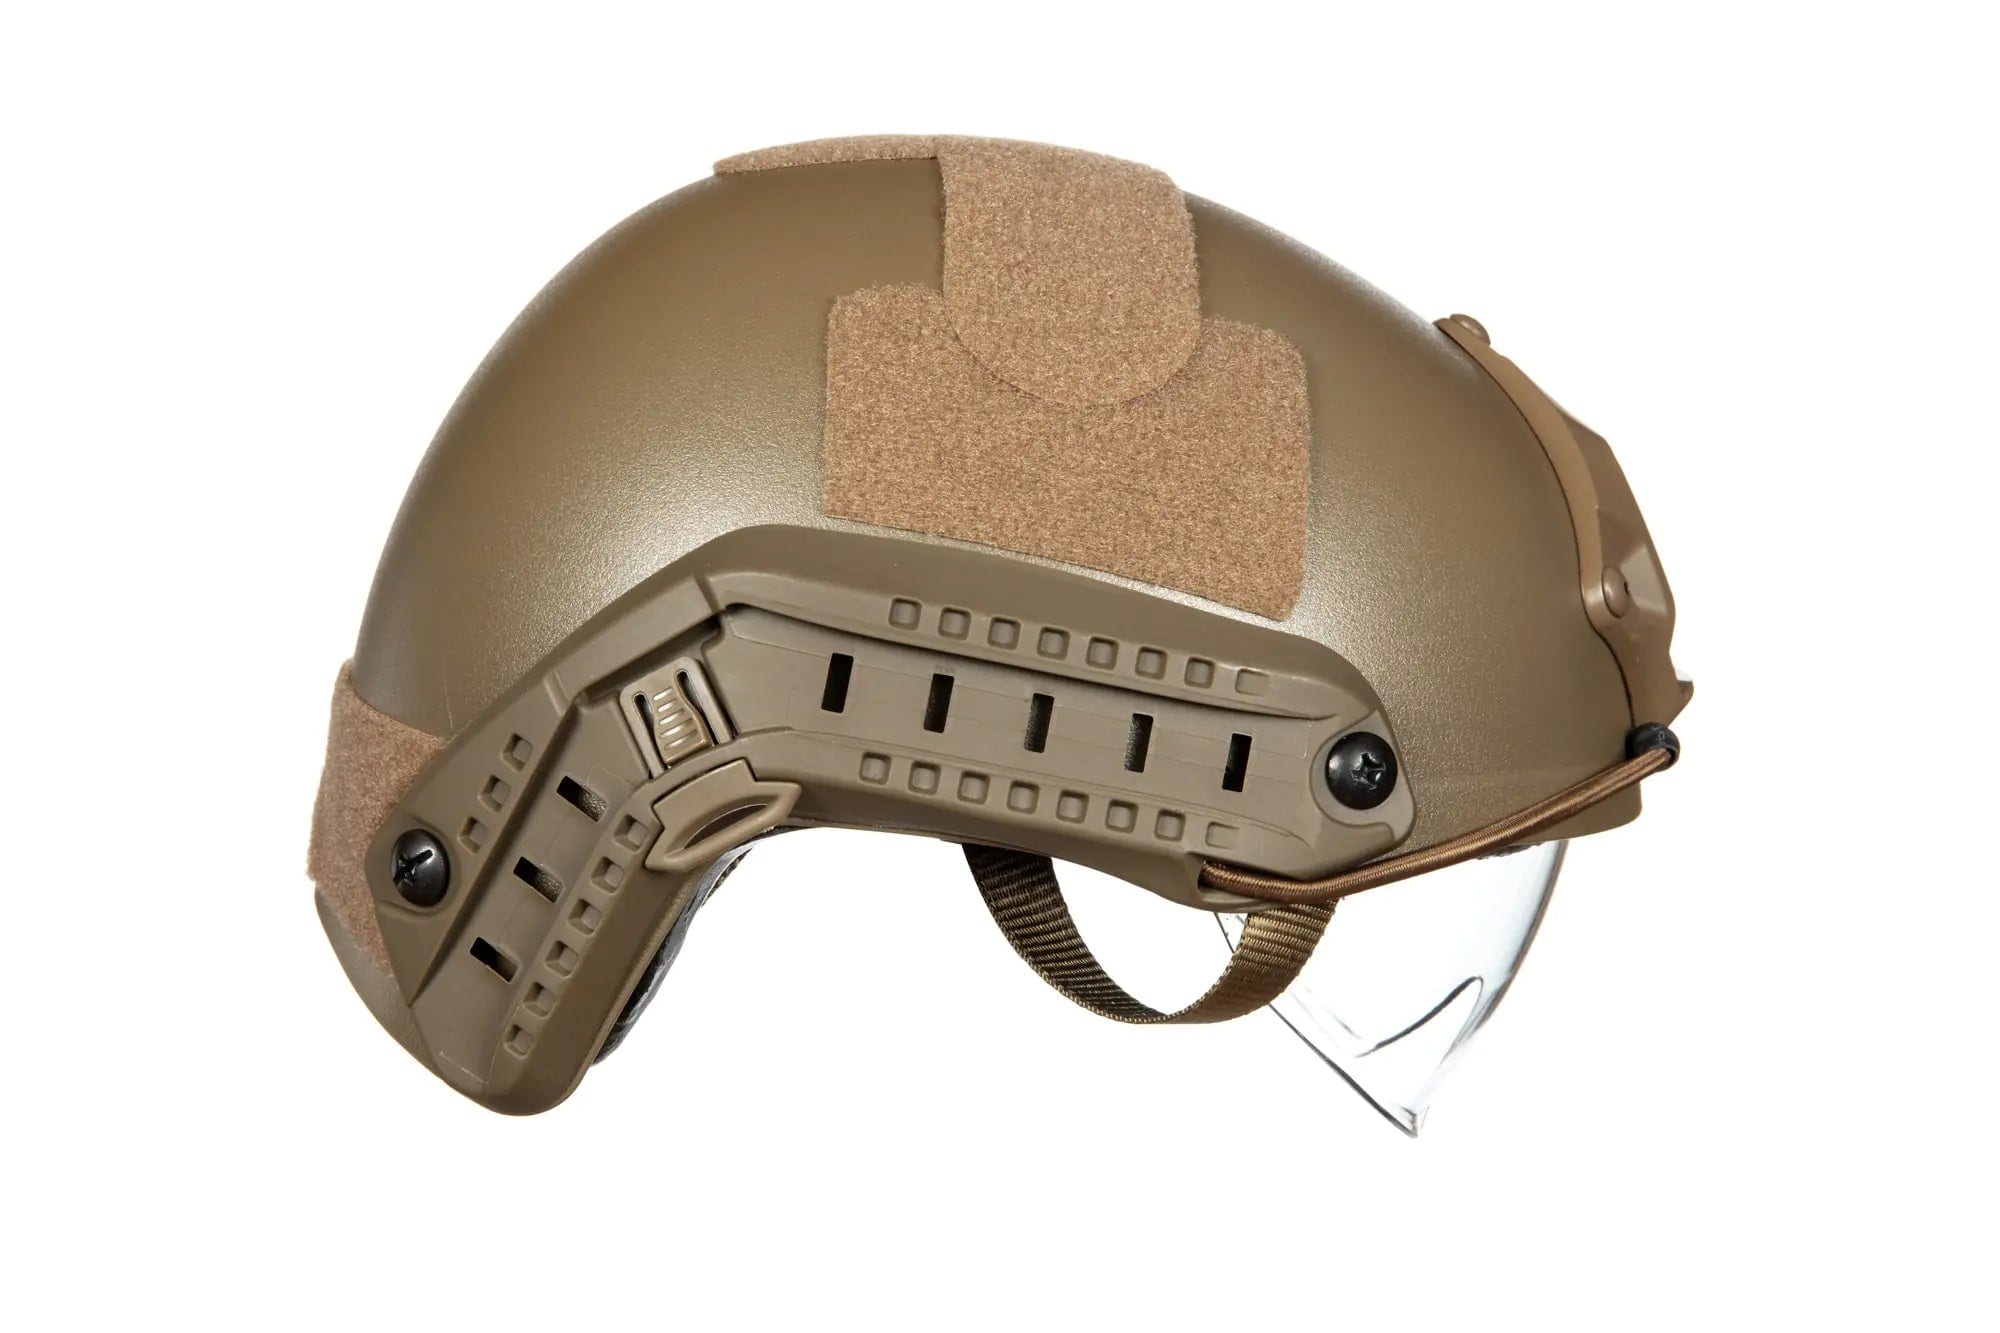 X-Shield MH Helmet Replica With Goggles - Tan